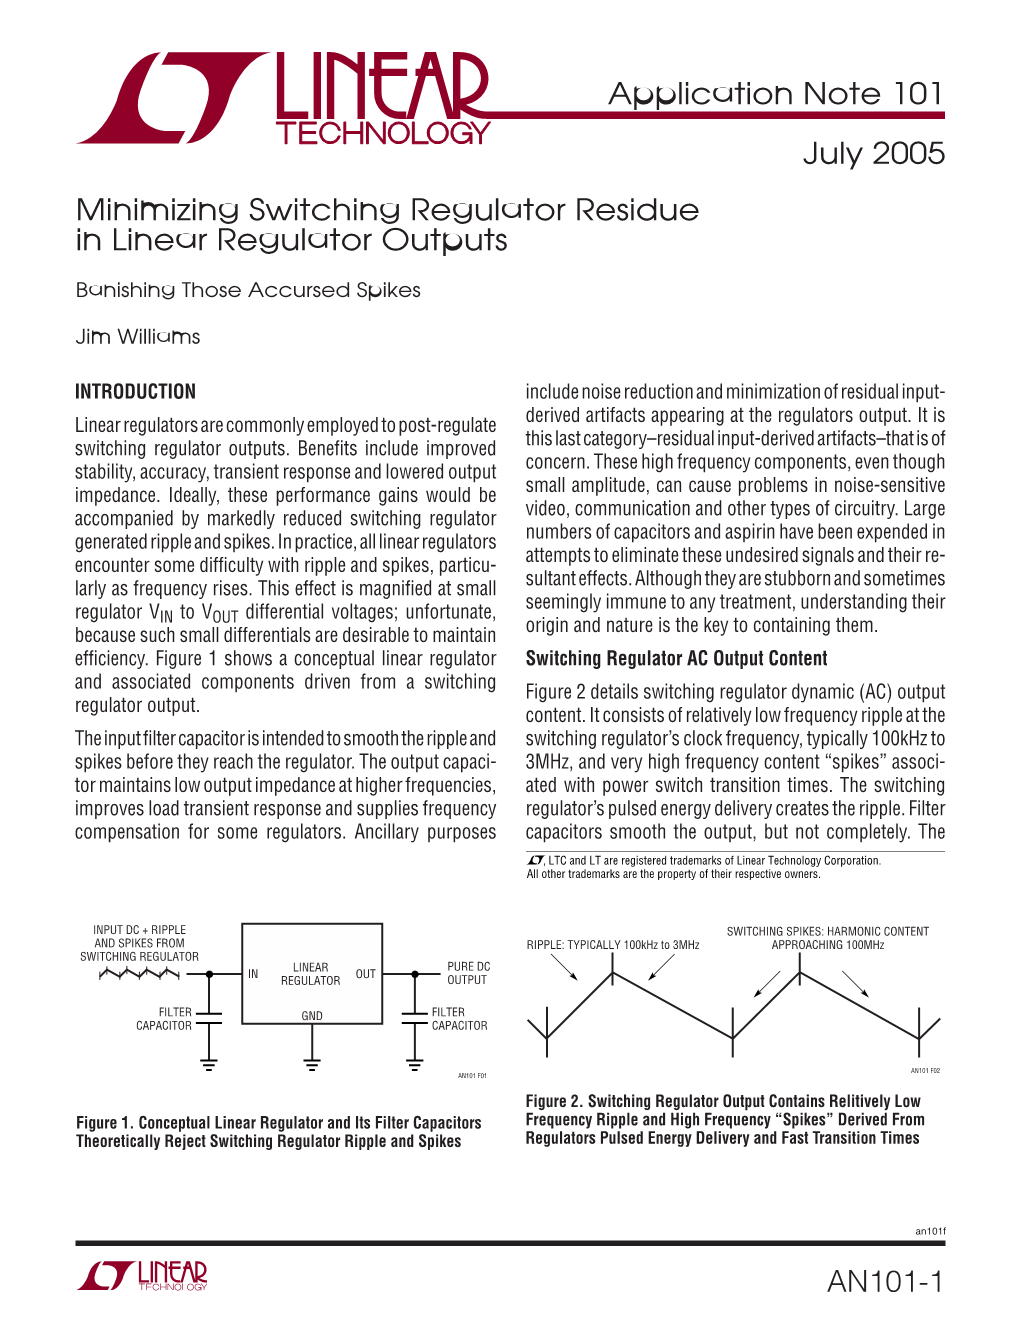 Minimizing Switching Regulator Residue in Linear Regulator Outputs